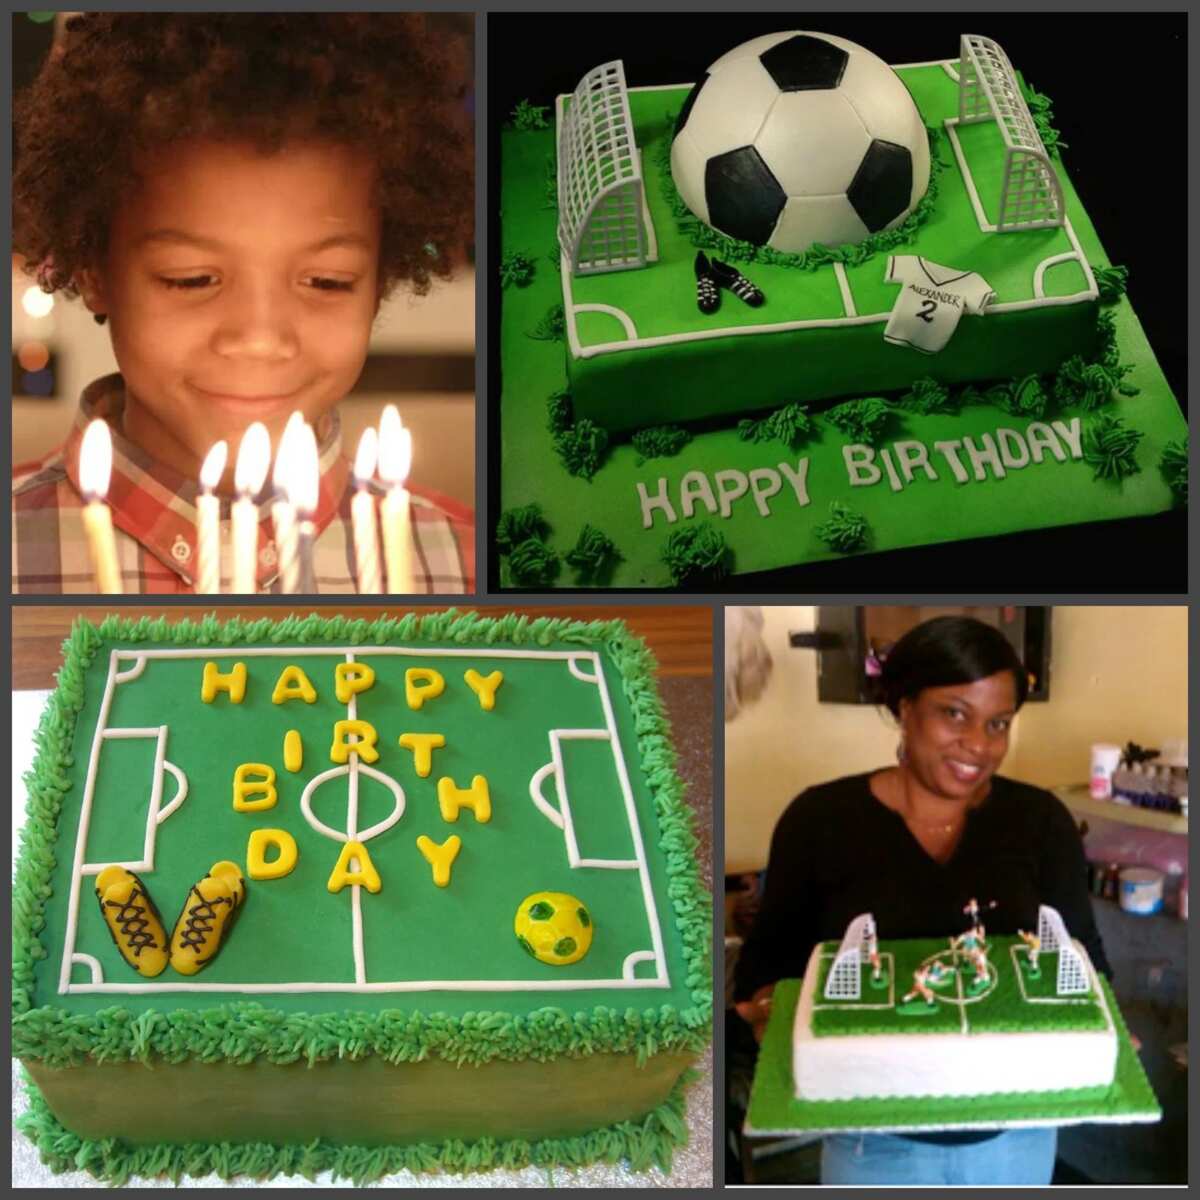 Football - By Flavour & Theme - Celebration Cakes